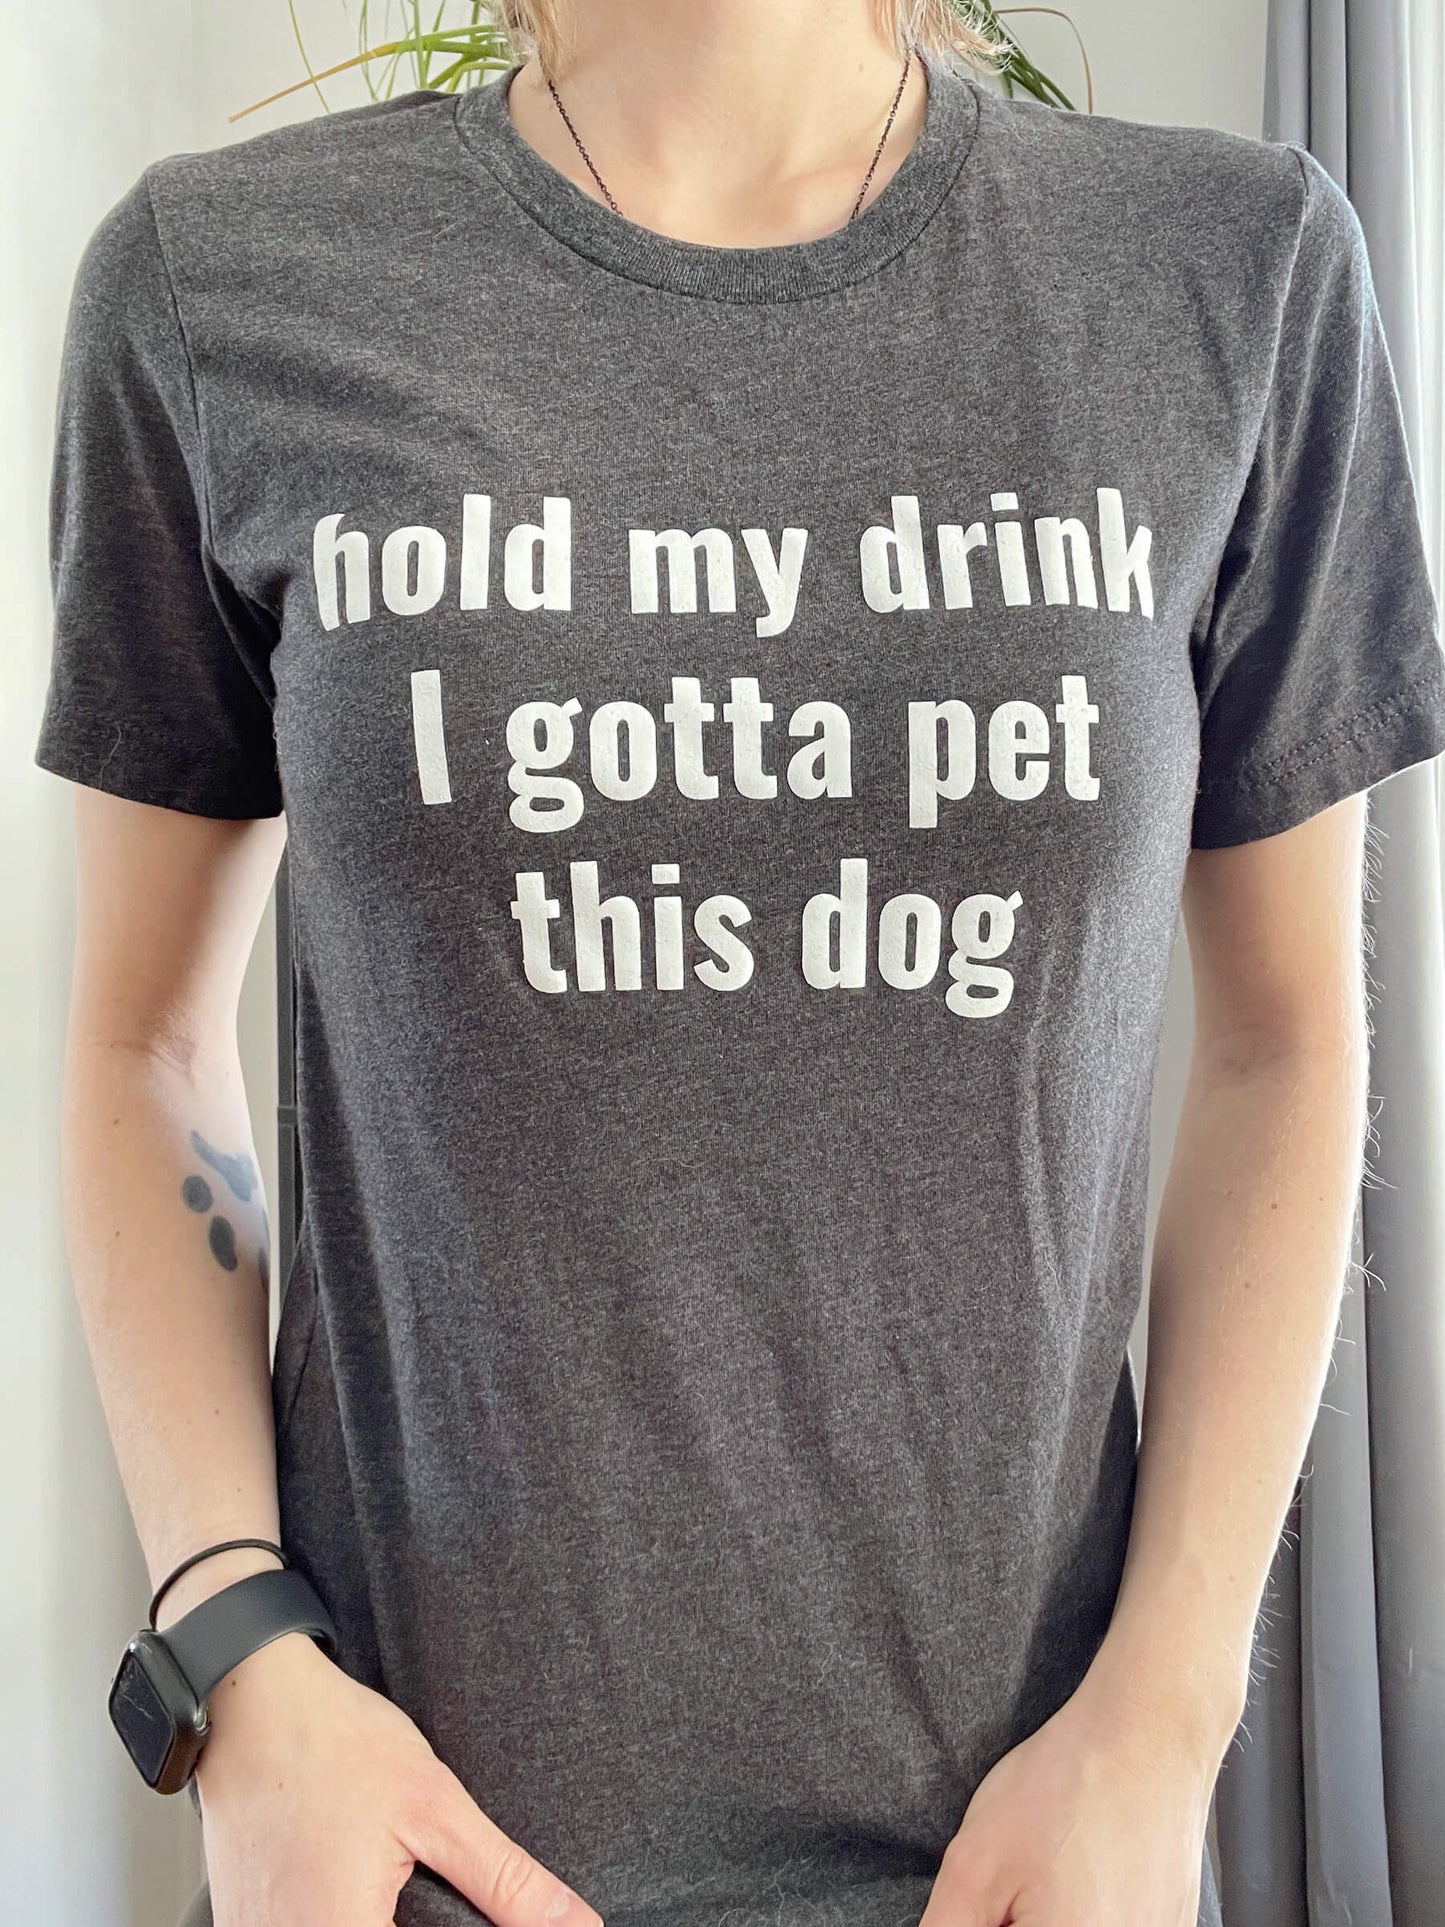 funny dog mom shirt says hold my drink I gotta pet this dog